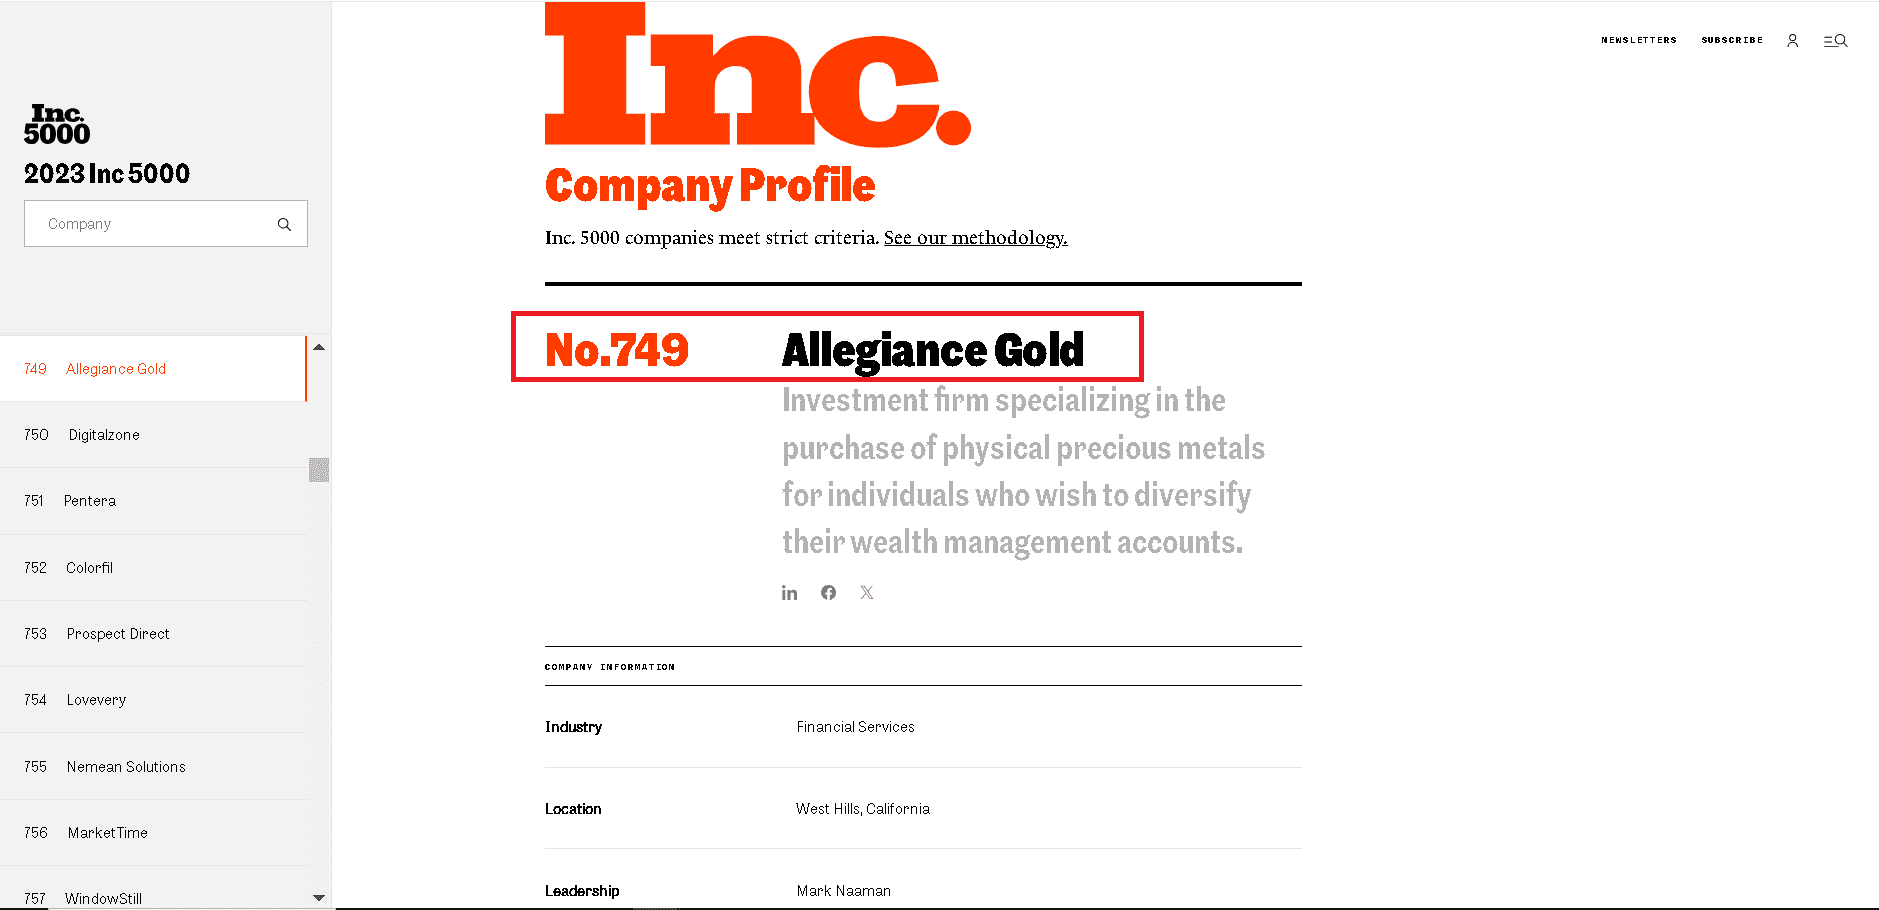 Inc 5000 has Allegiance Gold high on that list